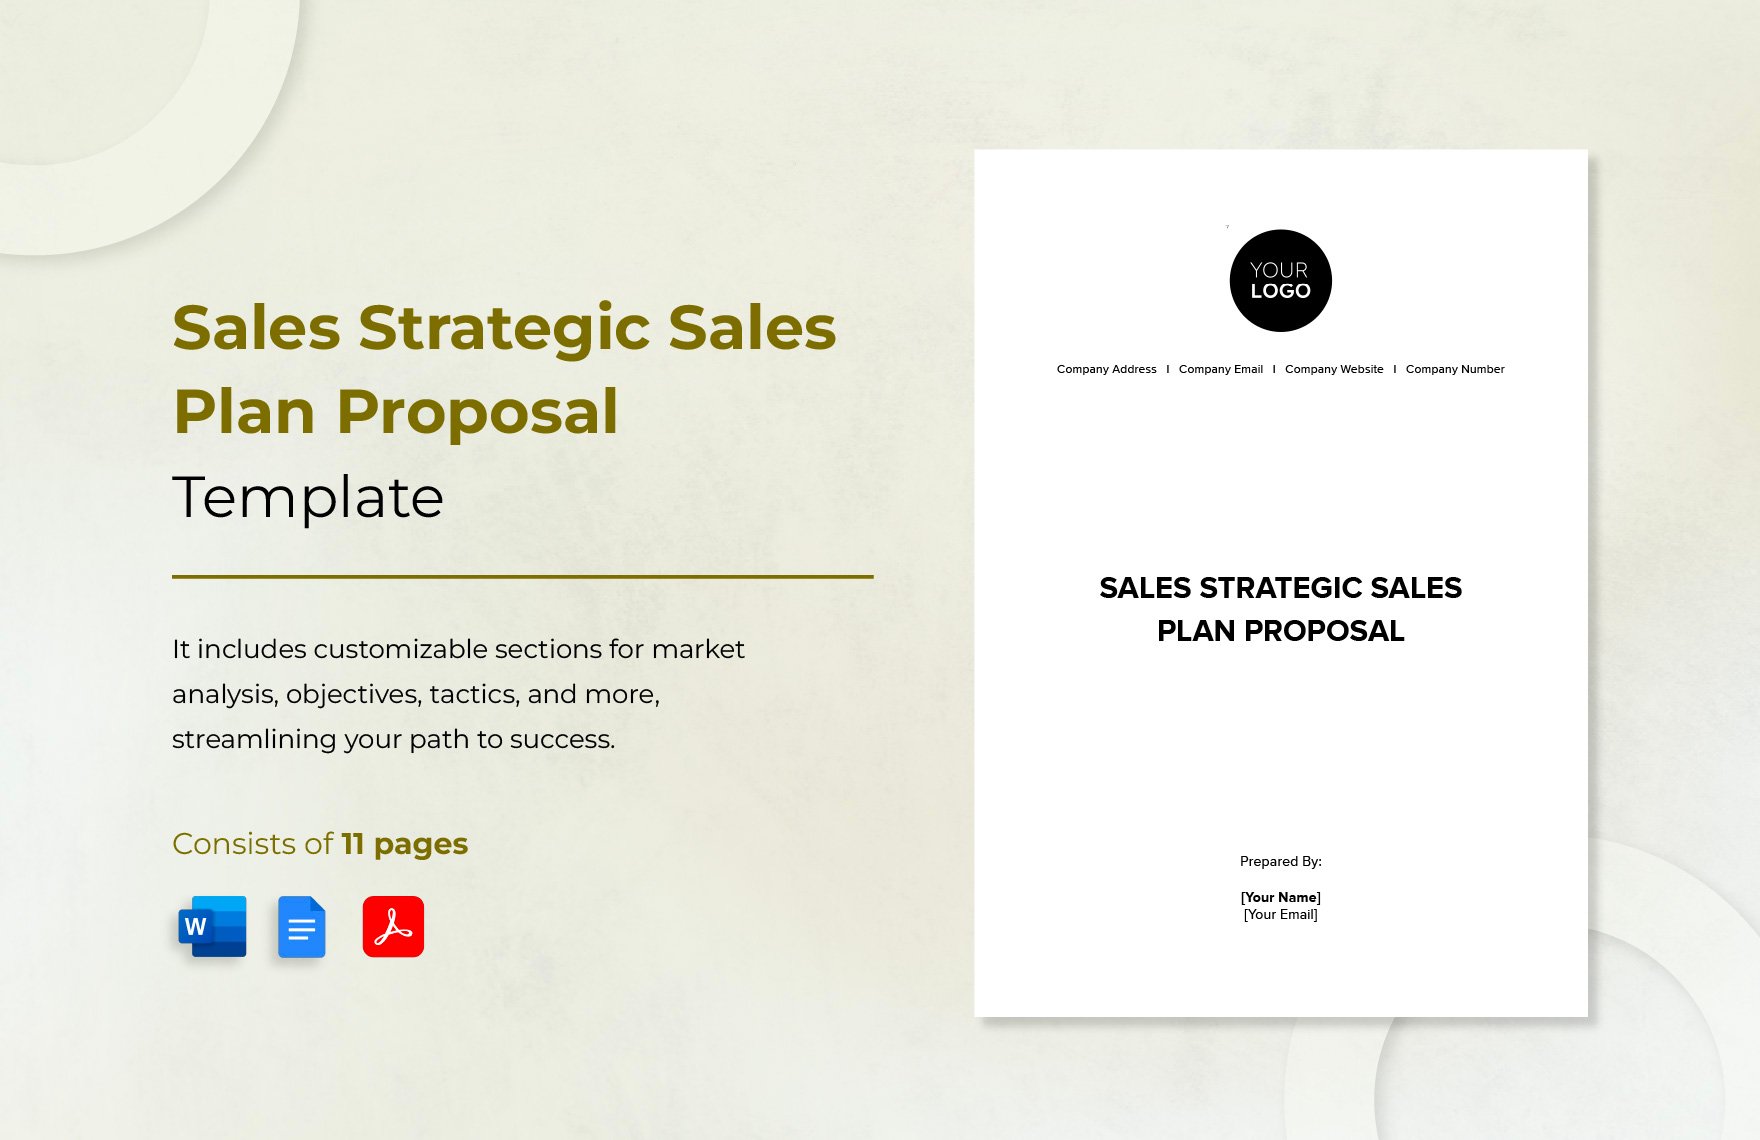 Sales Strategic Sales Plan Proposal Template